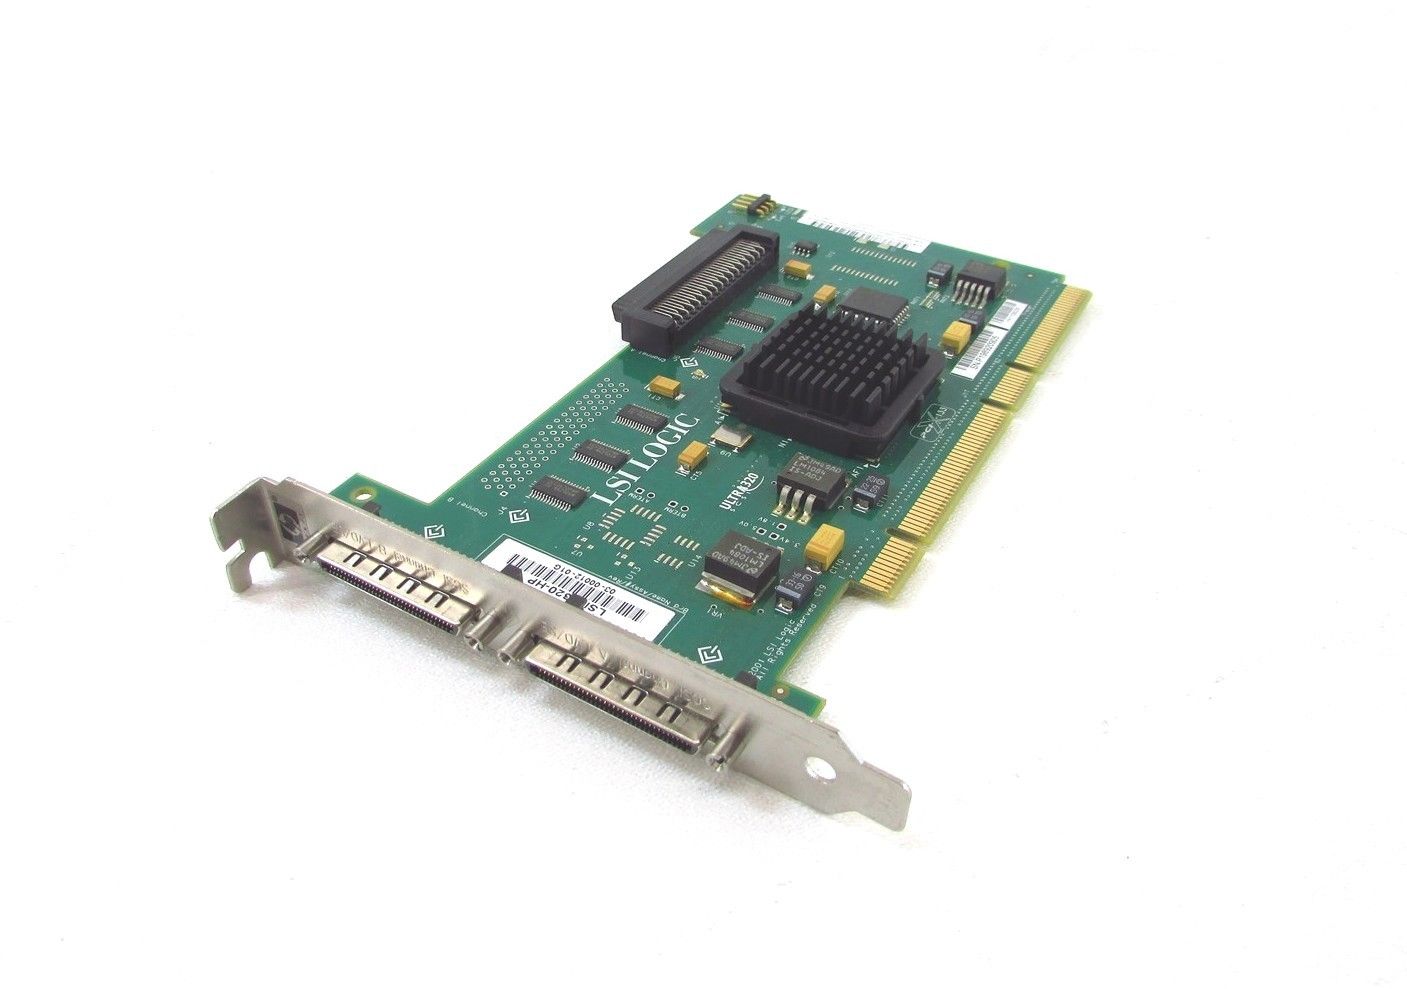 LSI22320LP | HP DL380 G4 Dual Channel 64Bit Ultra-320 SCSI Adapter